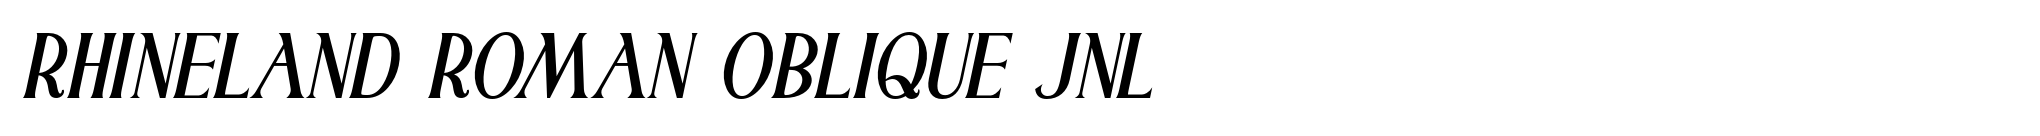 Rhineland Roman Oblique JNL image